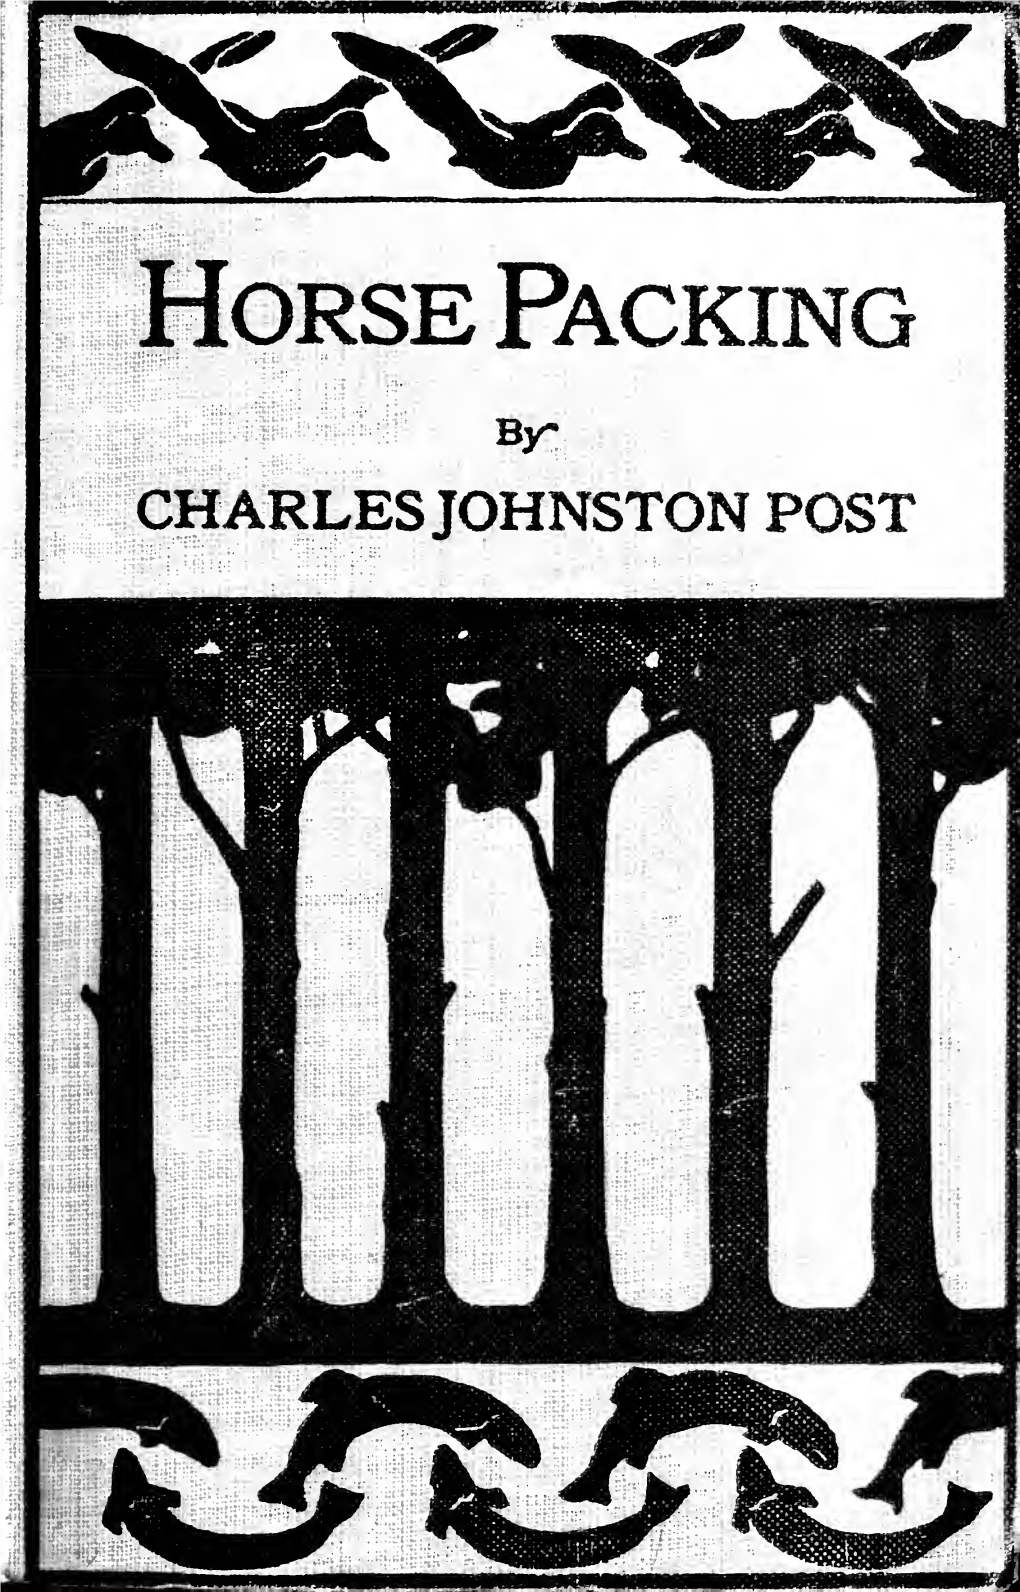 Horse Packing by CHARLESJOHNSTON POST 3